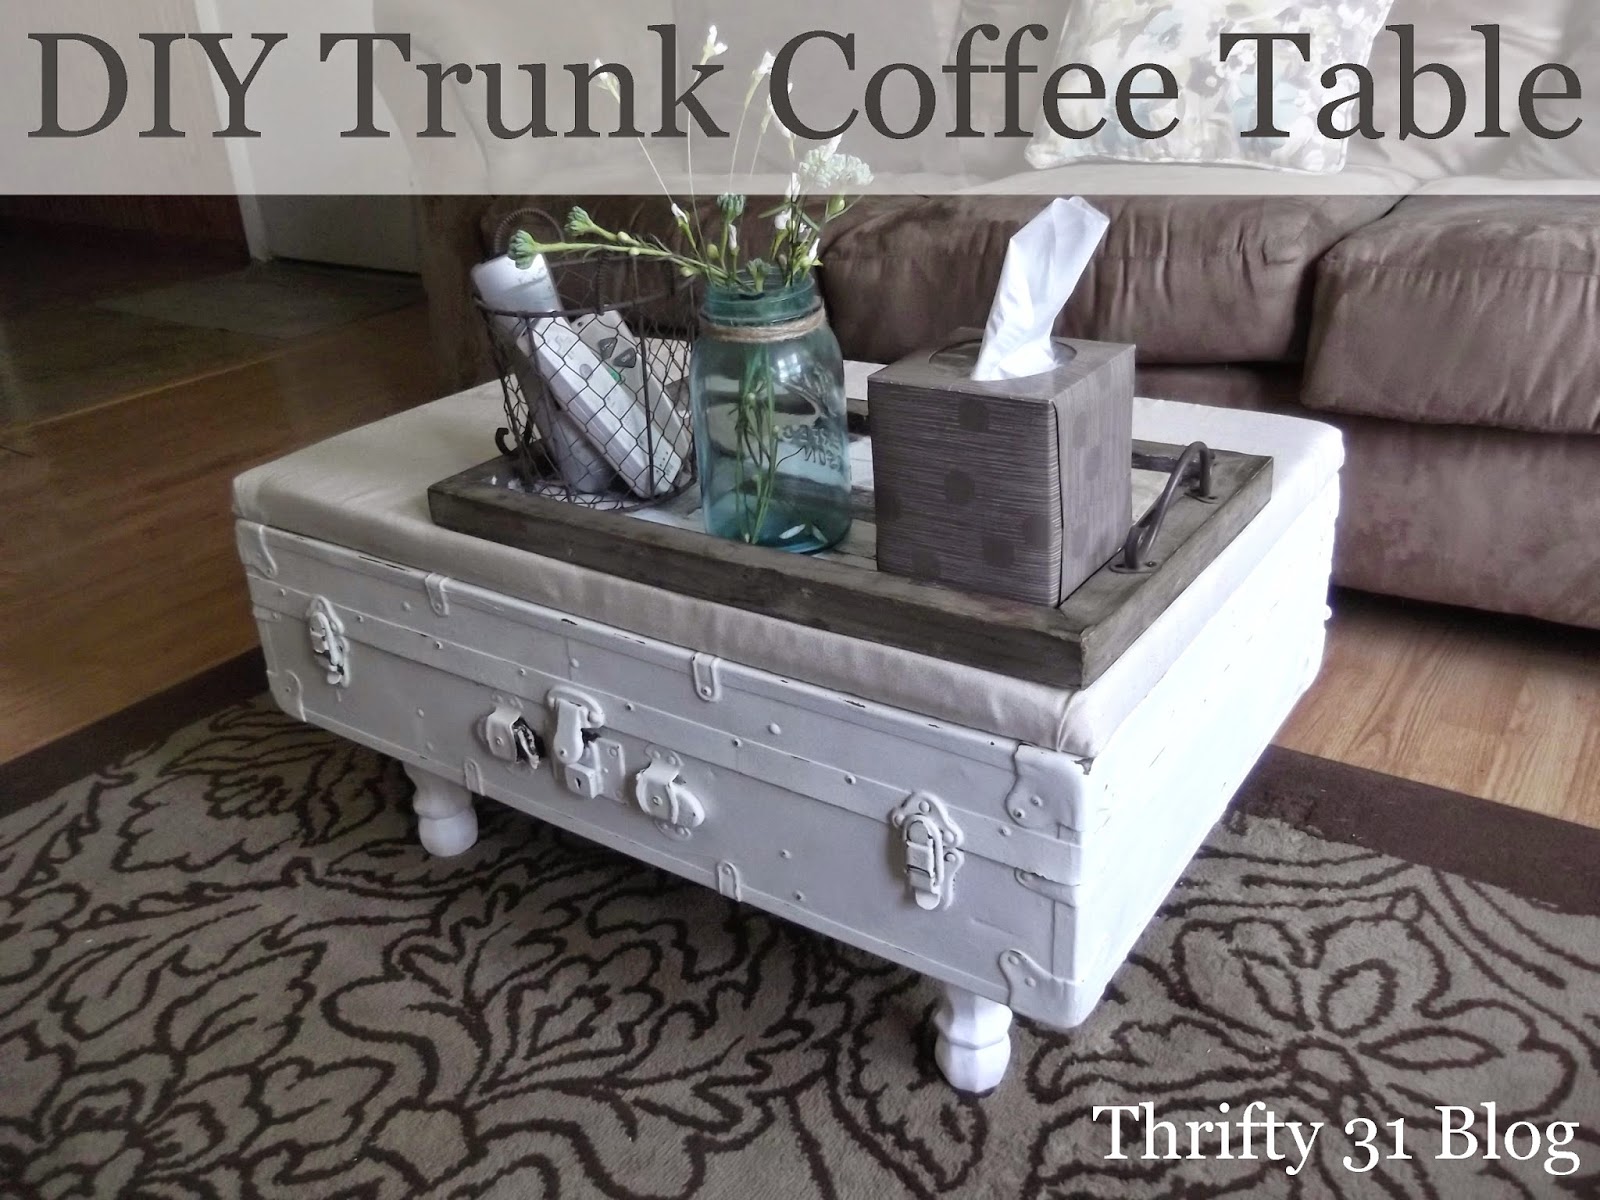 Thrifty 31 Blog: DIY Trunk Coffee Table